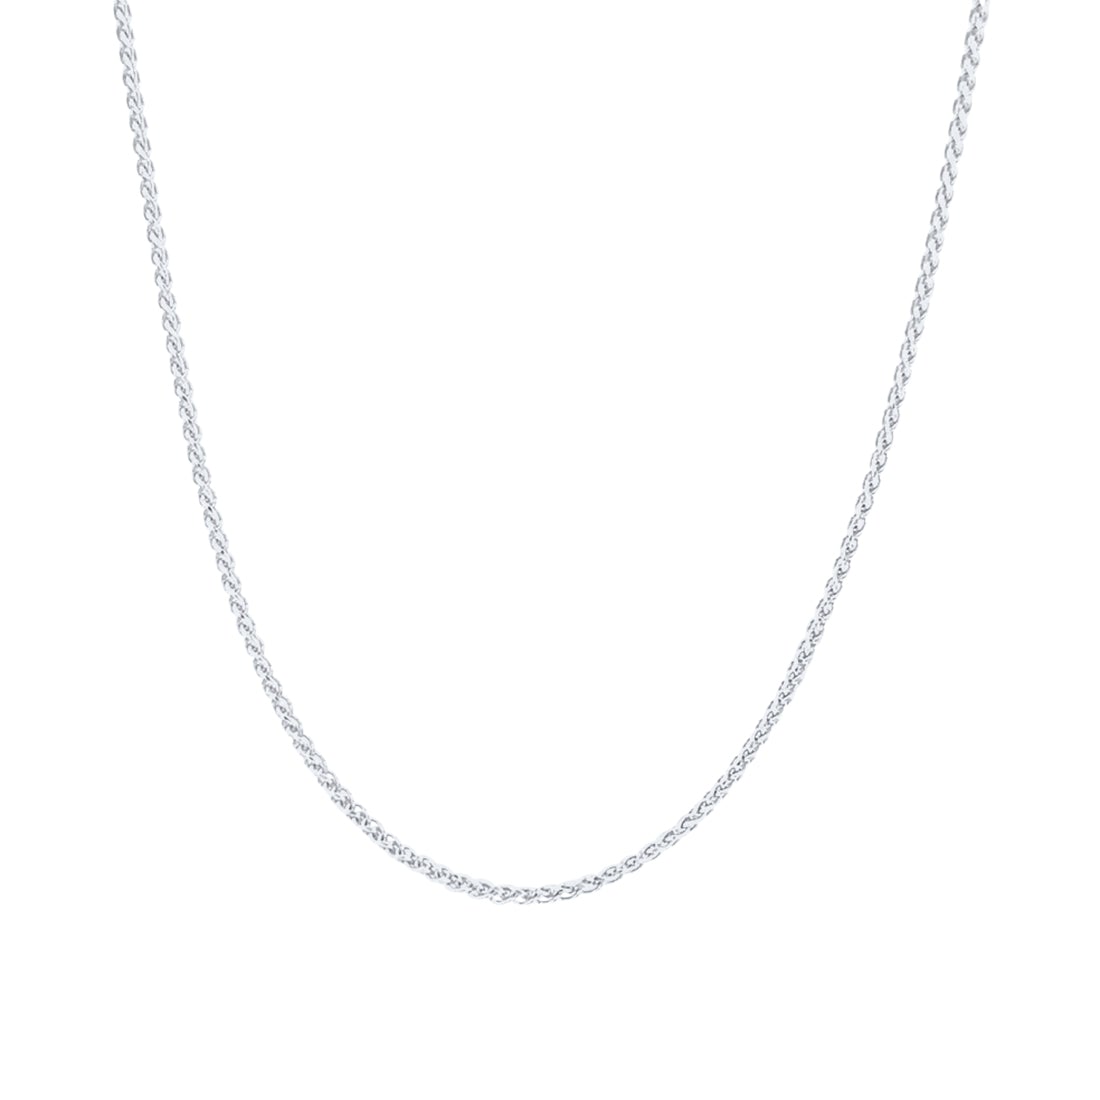 9ct White Gold Wheat Necklace Chain 46cm Necklaces Bevilles 